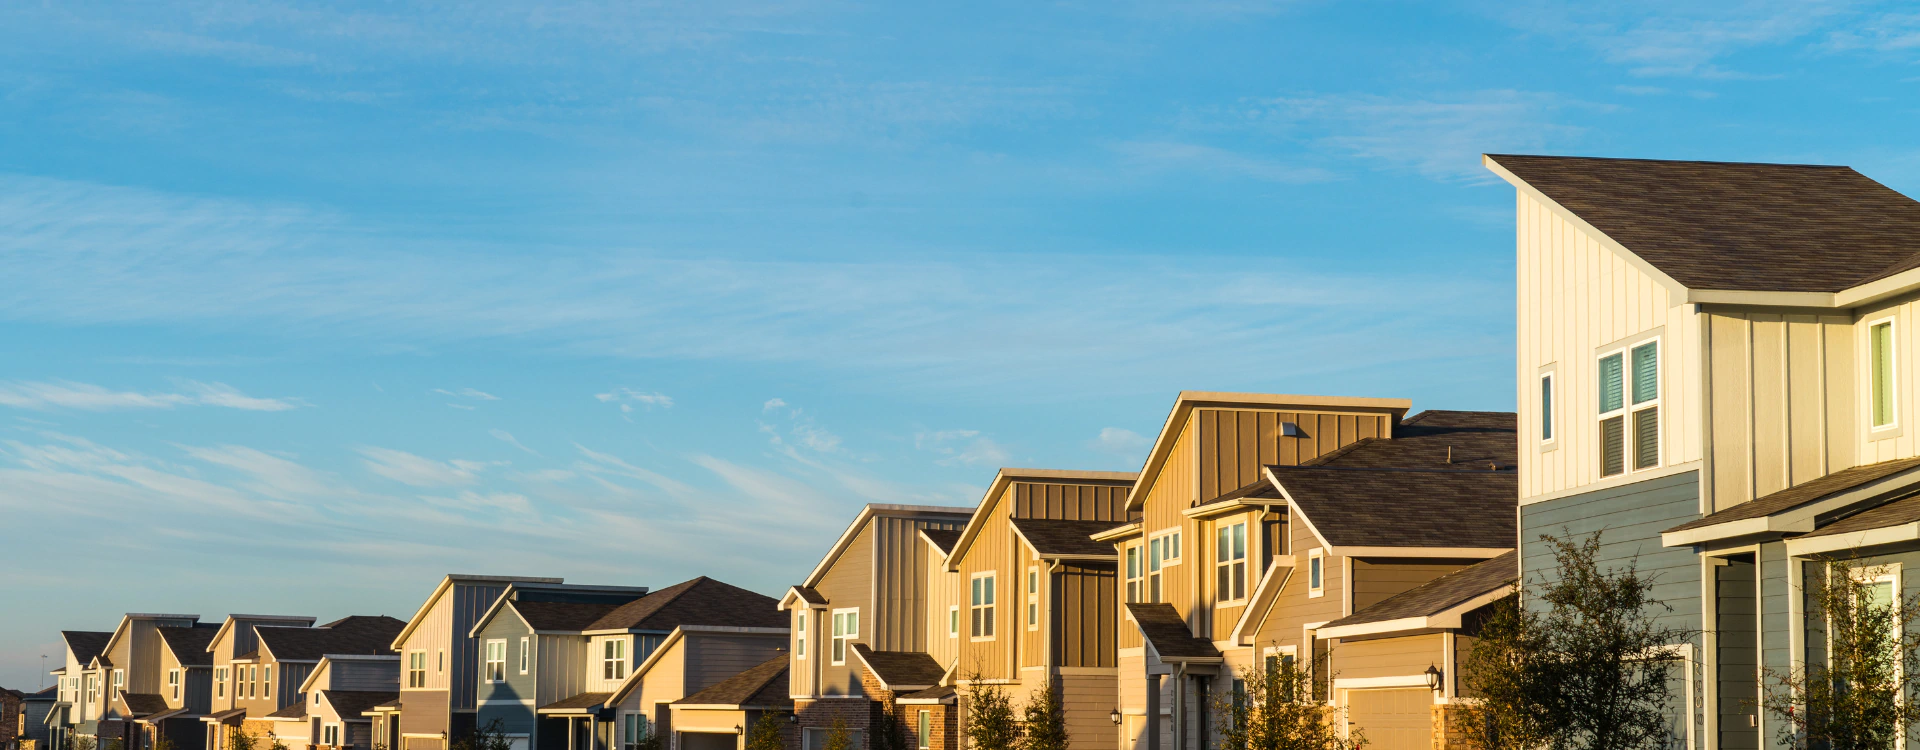 residential neighborhood houses and clear sky